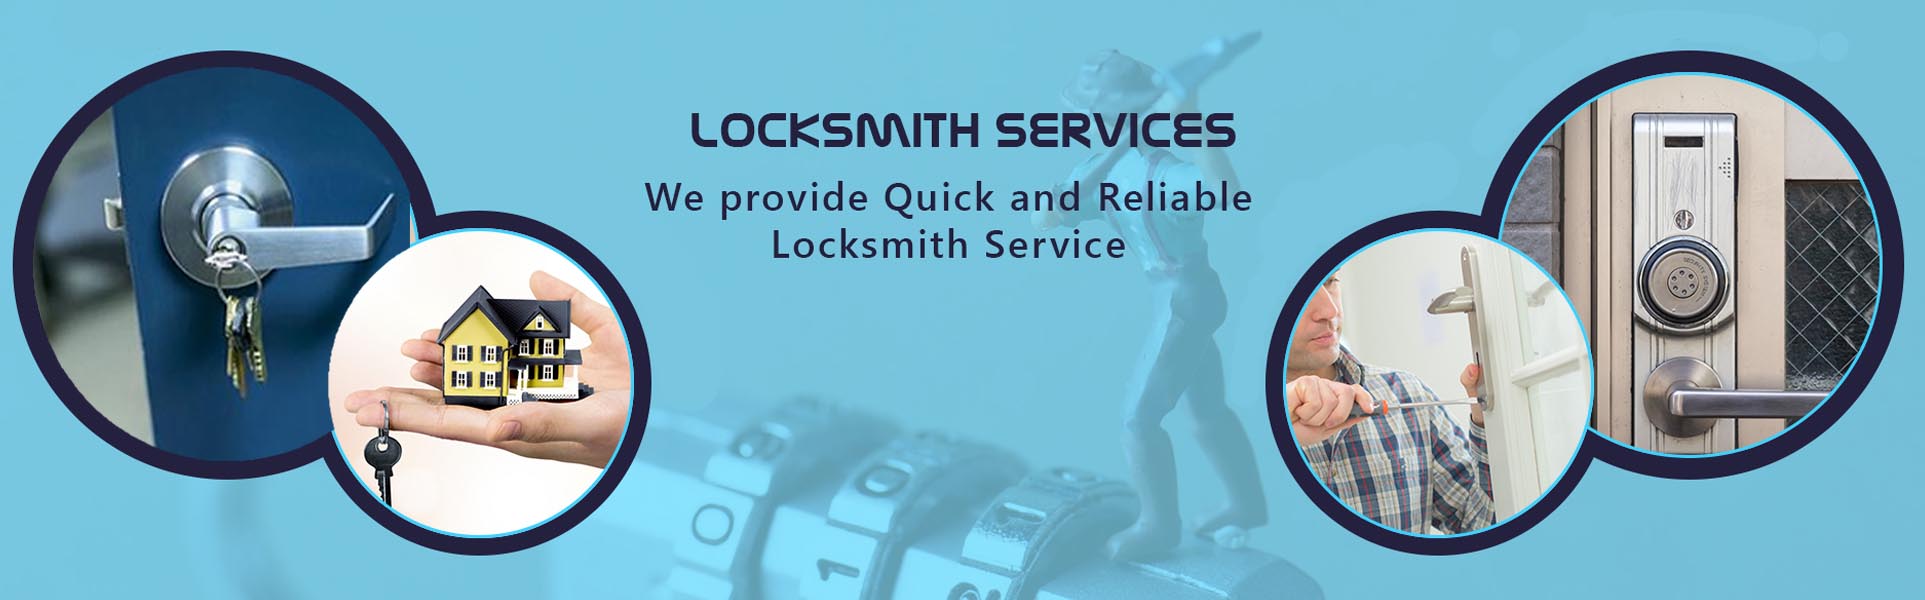 locksmith-service-in-London-min